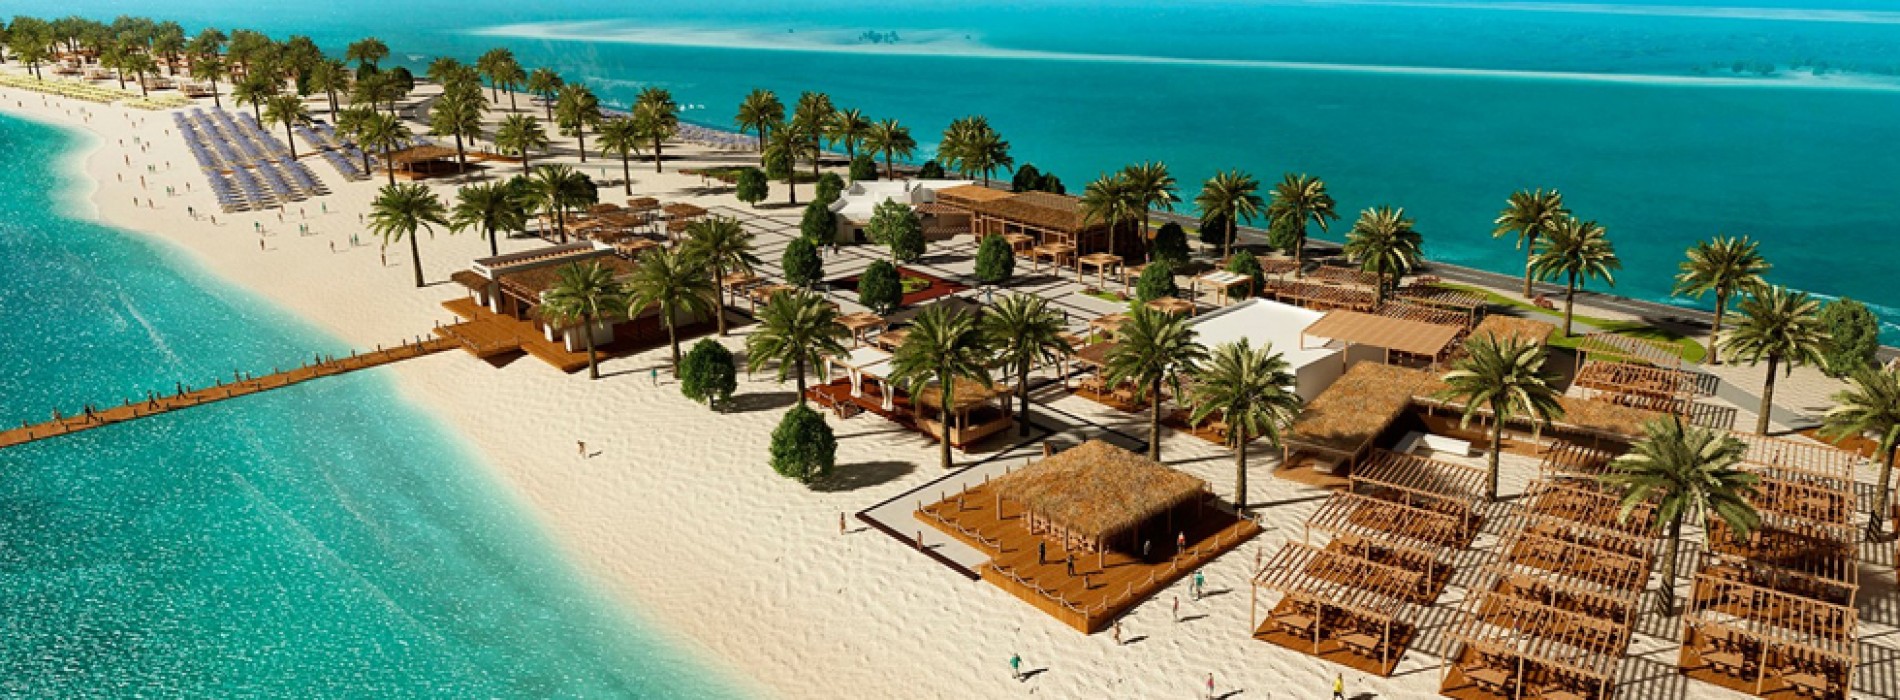 Sir Bani Yas Cruise Beach opens to passengers in Abu Dhabi